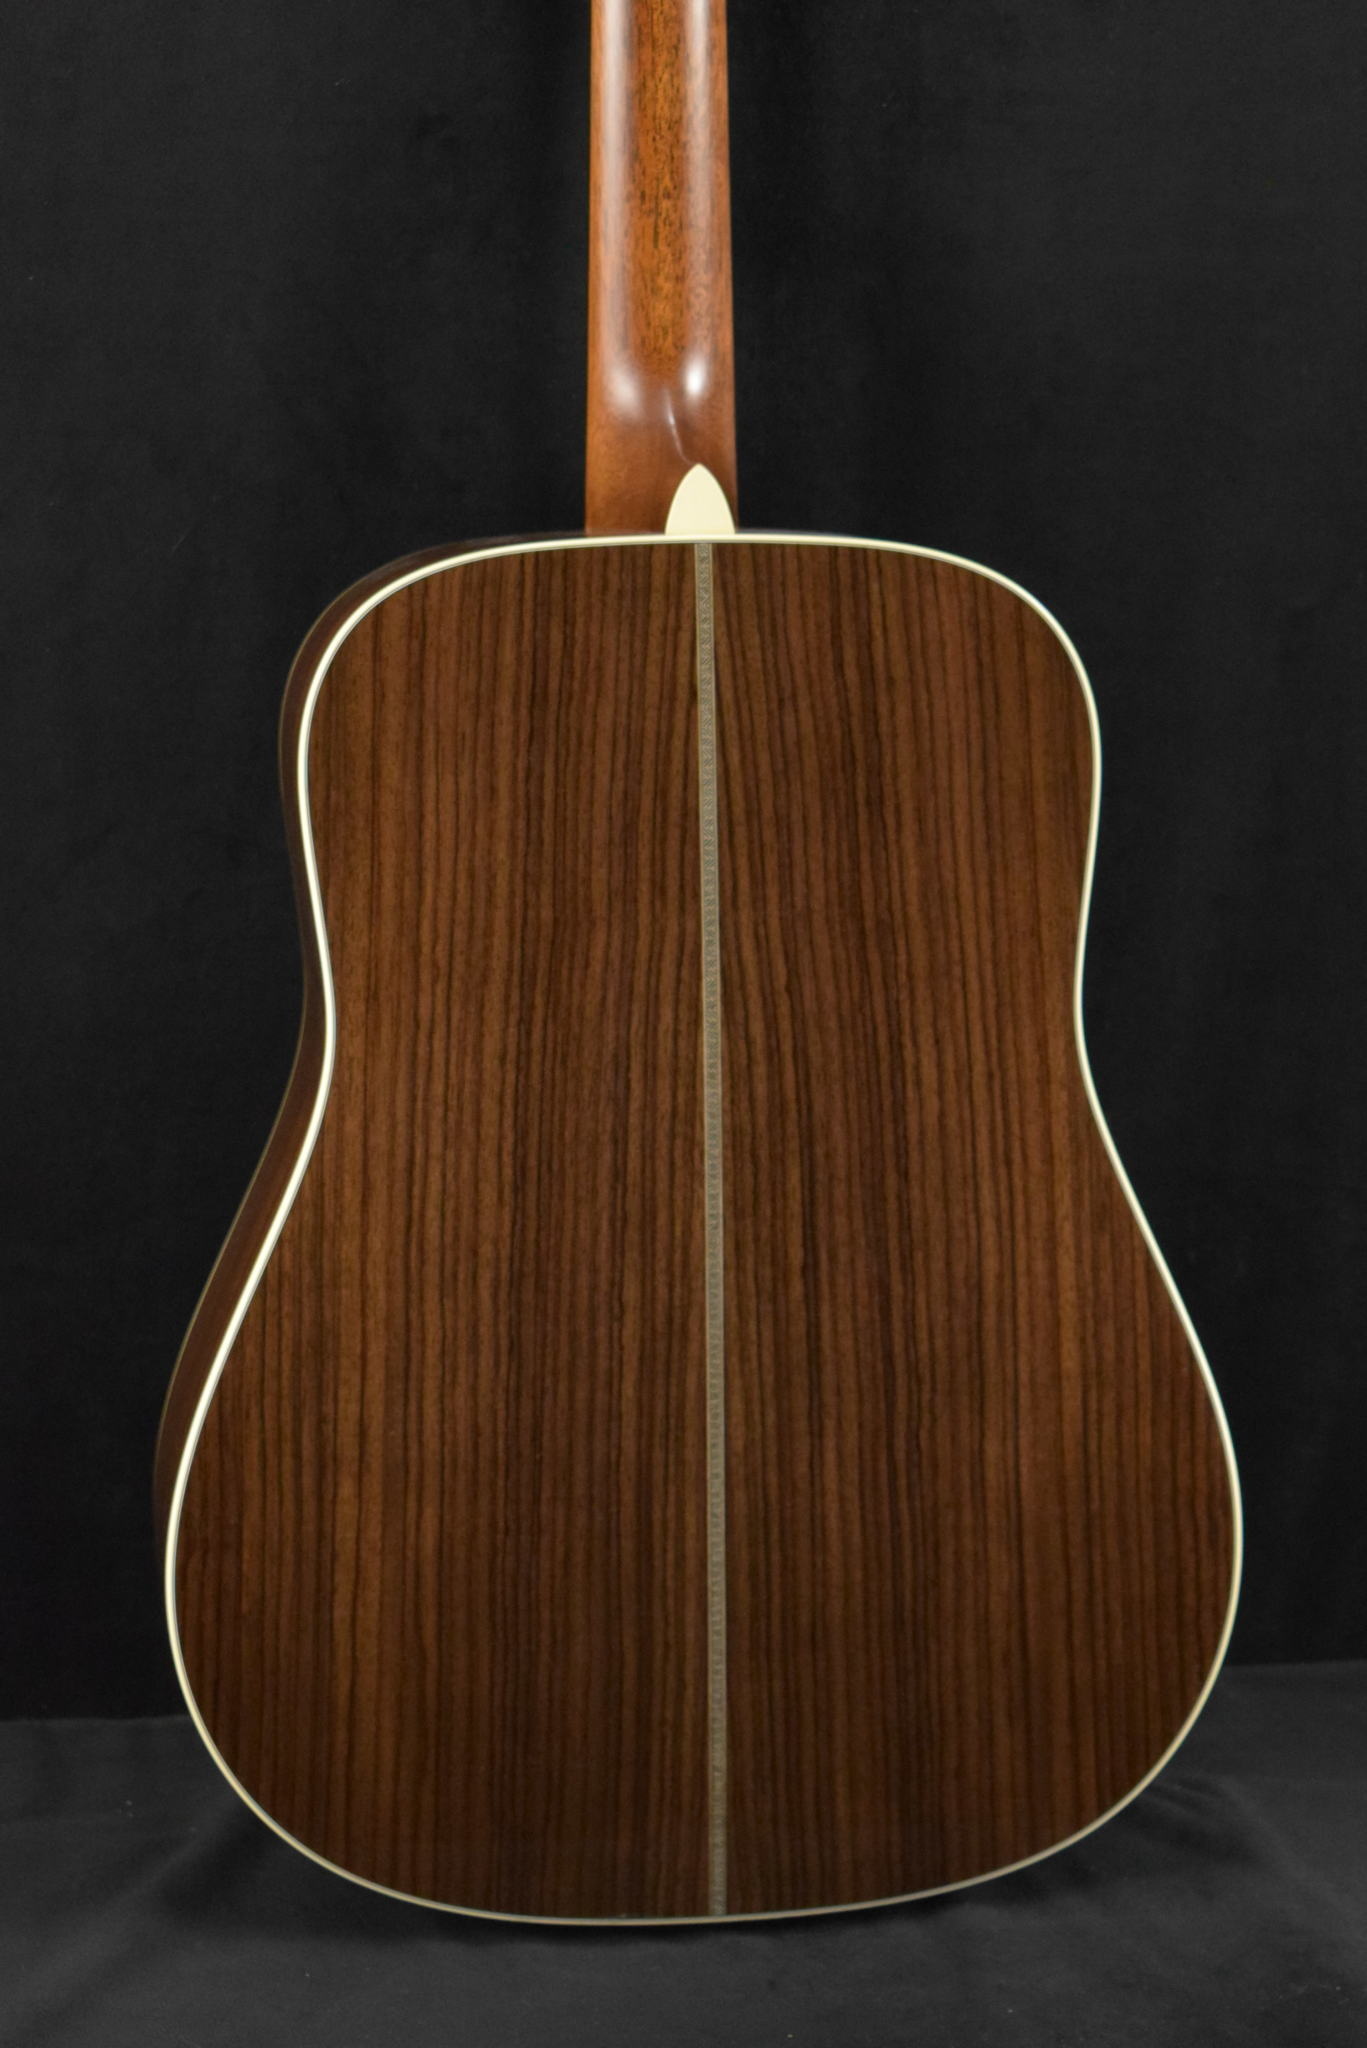 Martin Left Handed HD12-28 Standard Series 12 String Acoustic Guitar -  Adirondack Guitar